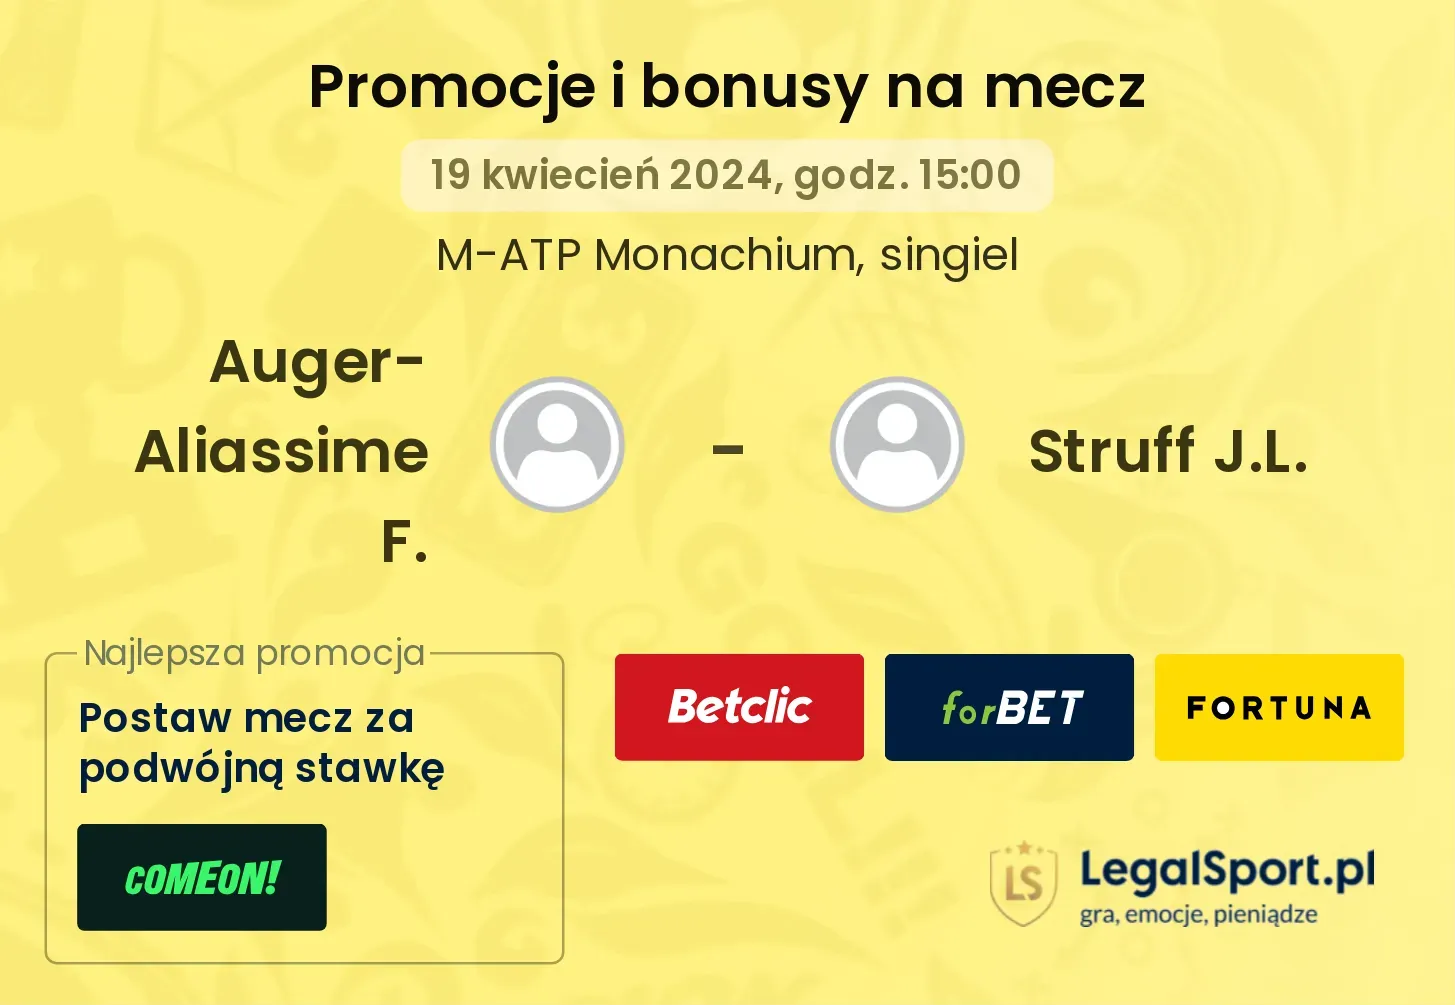 Auger-Aliassime F. - Struff J.L. promocje bonusy na mecz